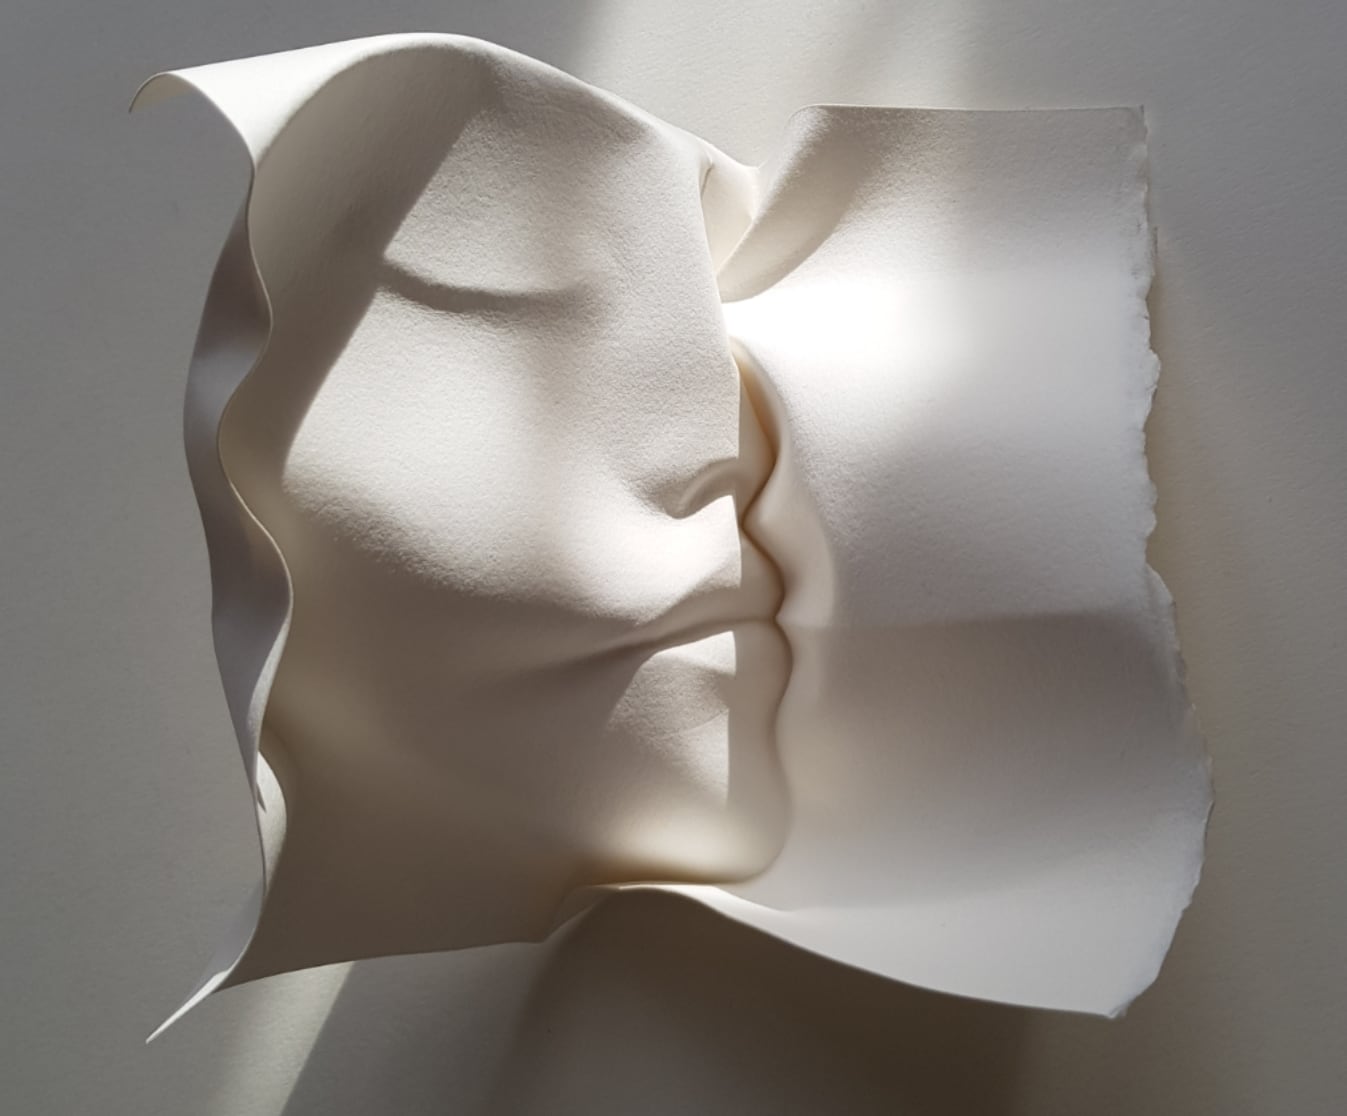 Patung Intim oleh Polly Verity dari Lembar Kertas Tunggal